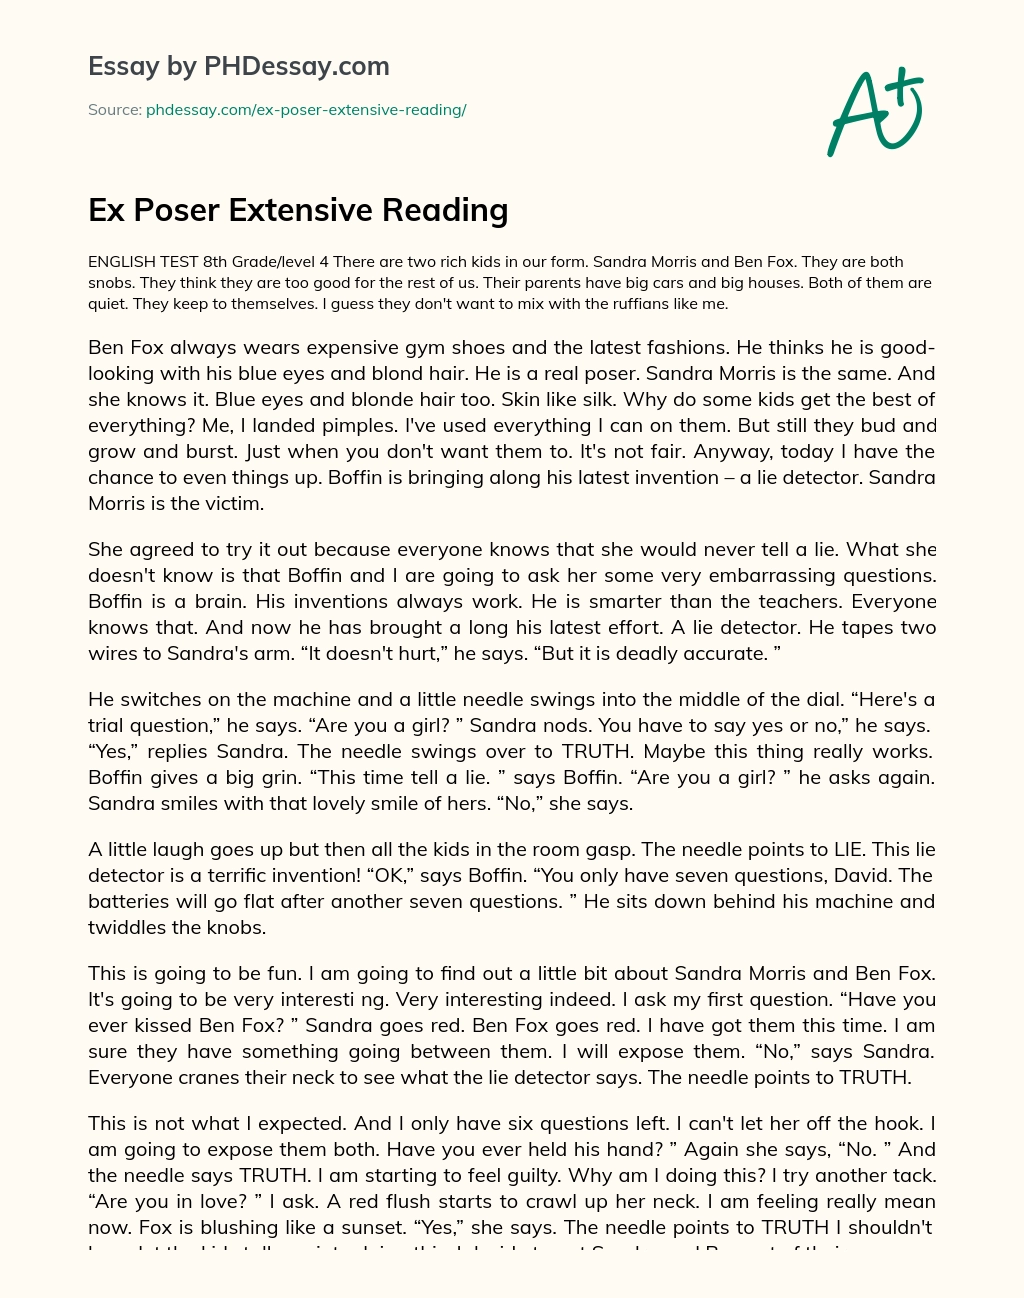 Ex Poser Extensive Reading essay